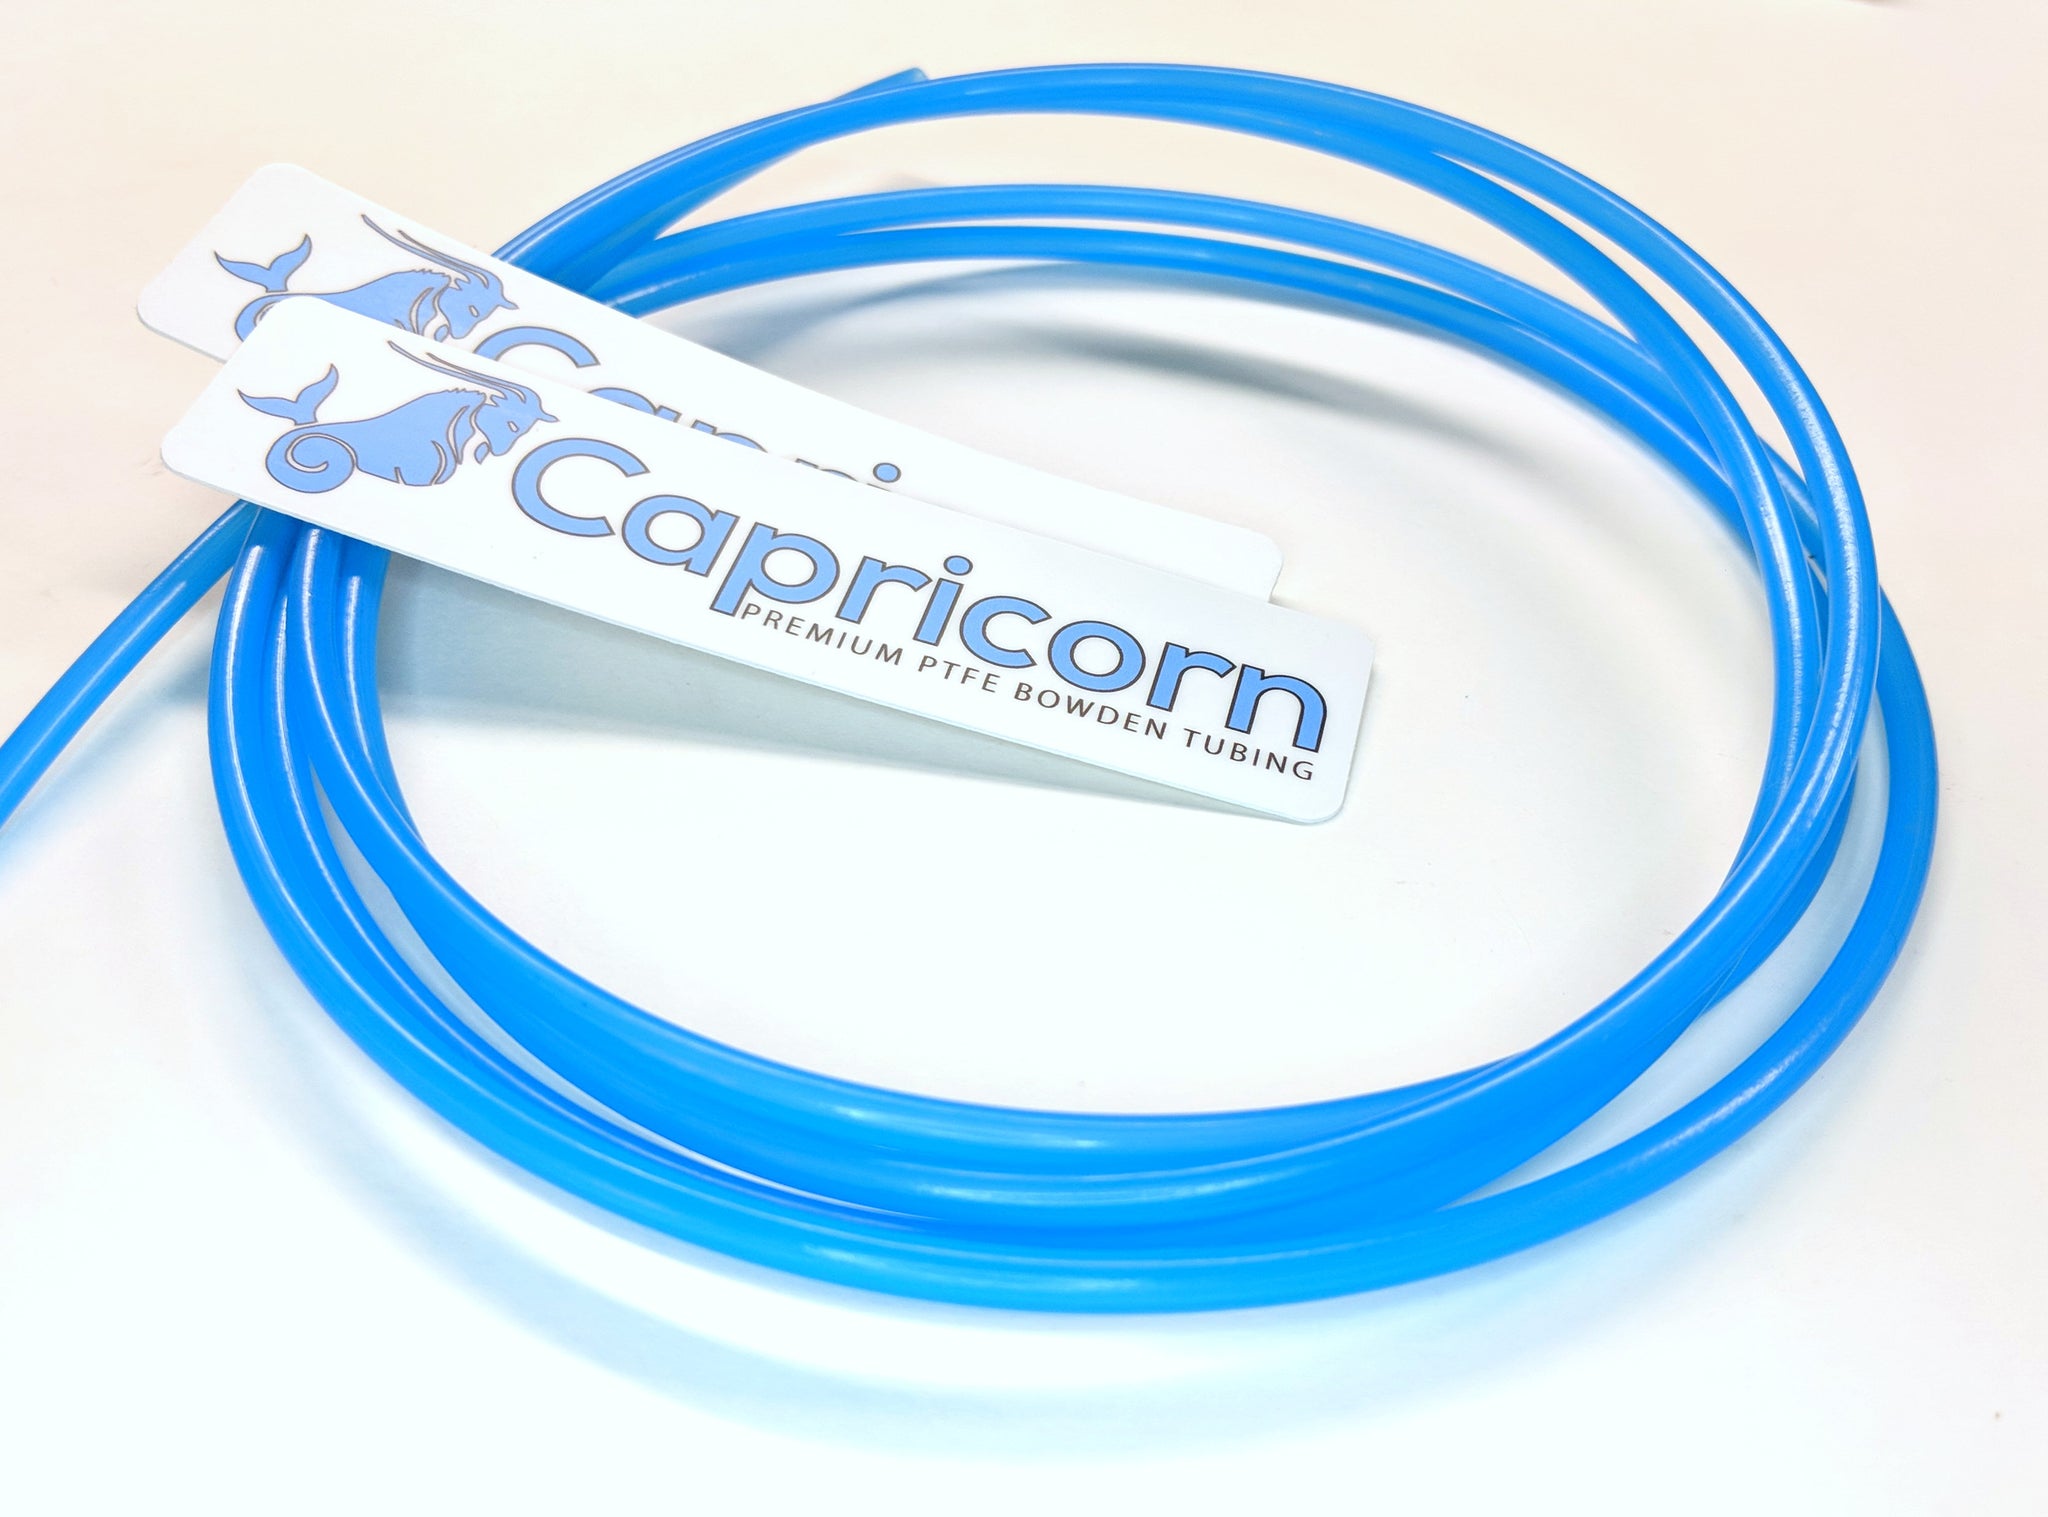 Capricorn 2 Meters TL Translucent 1.75mm Bowden Tubing –